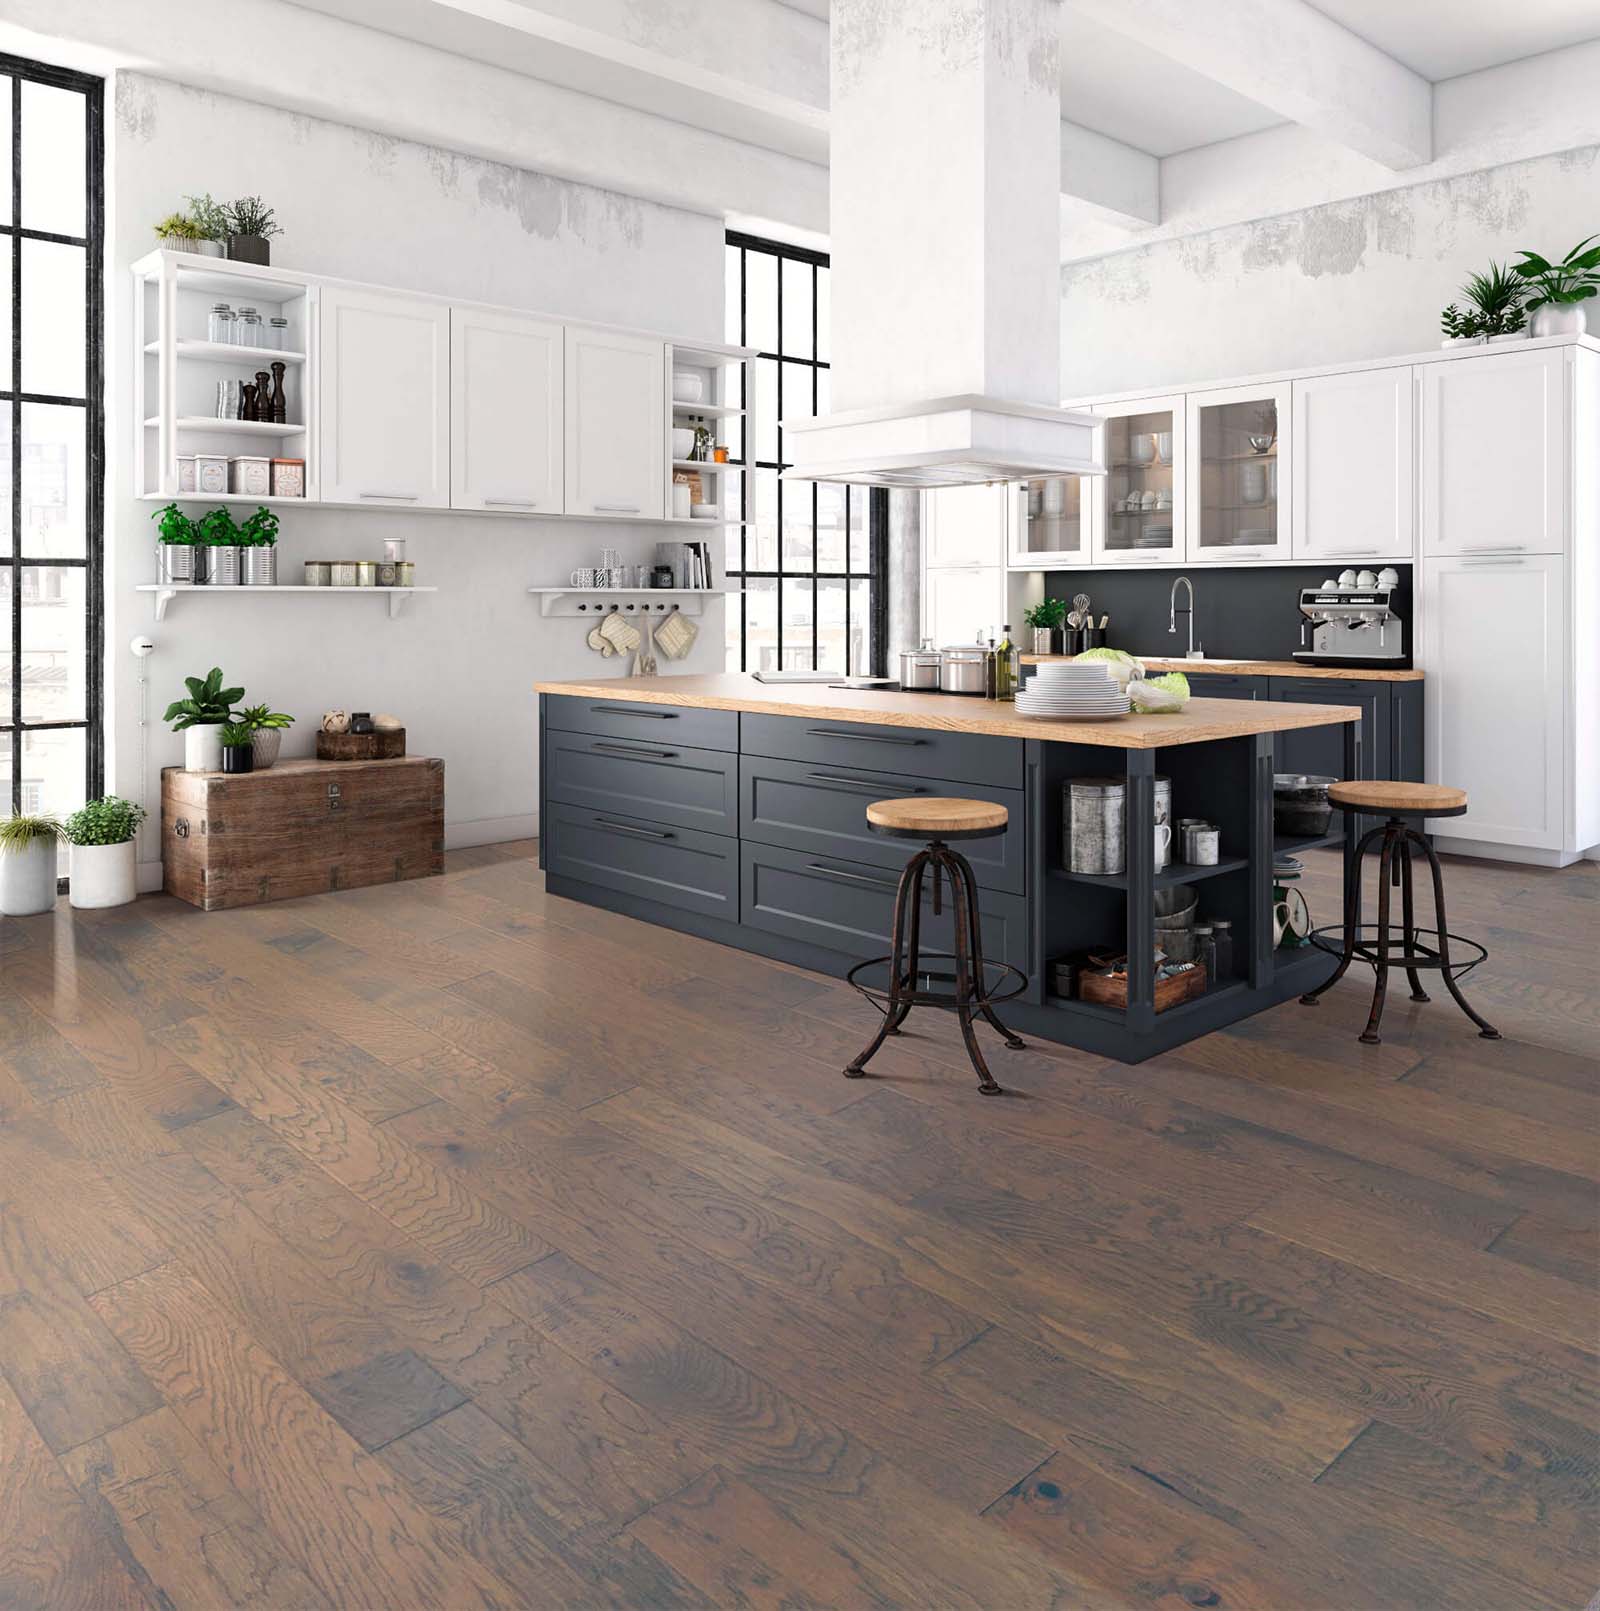 Hardwood flooring in kitchen | The L&L Company